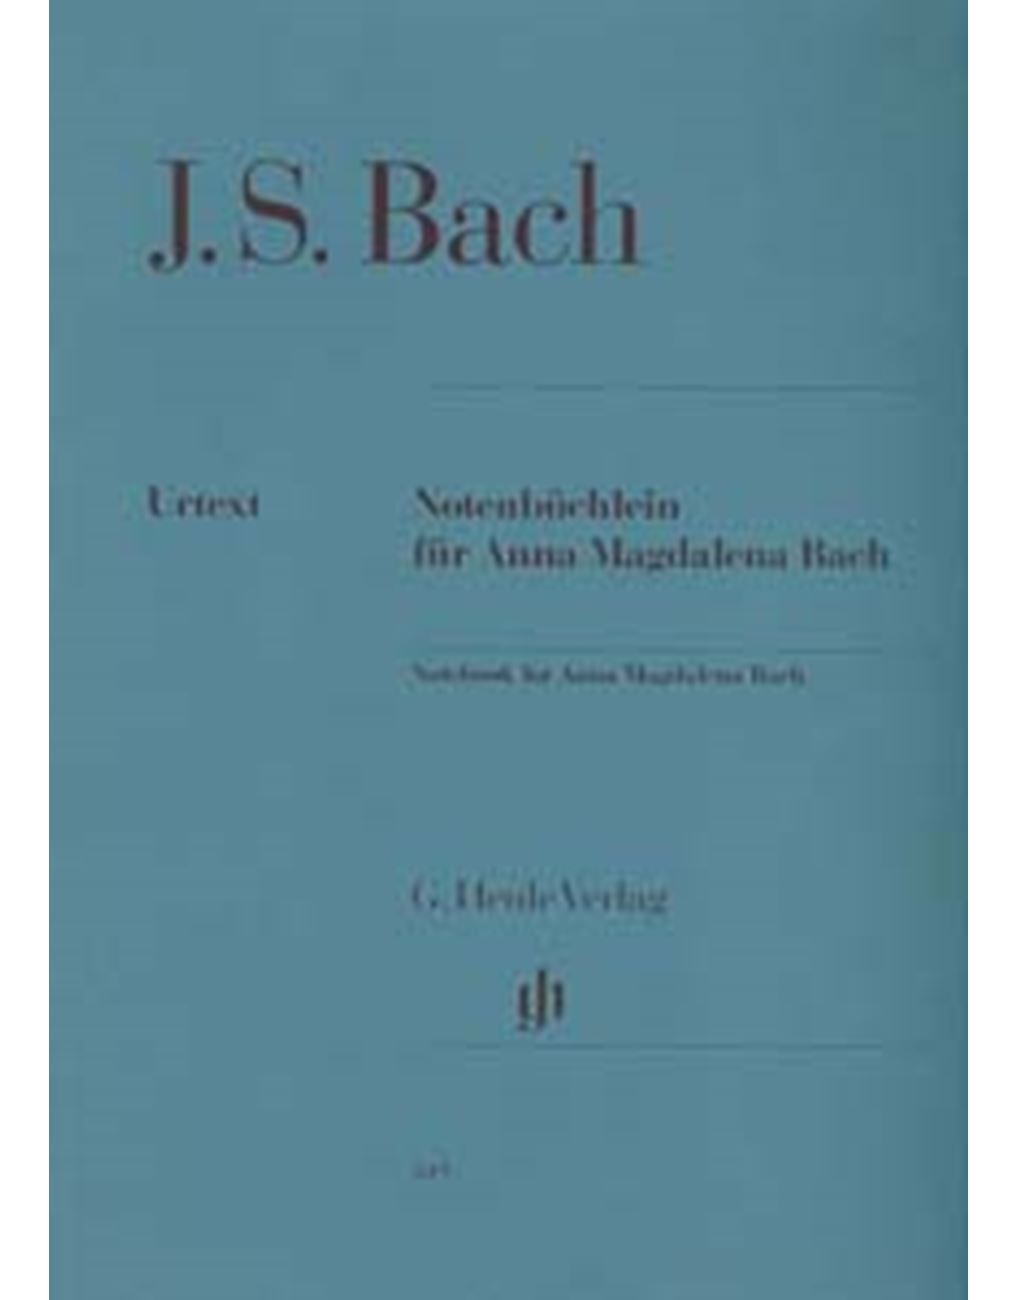 Bach J.S – Notebook for Anna Magdalena Bach